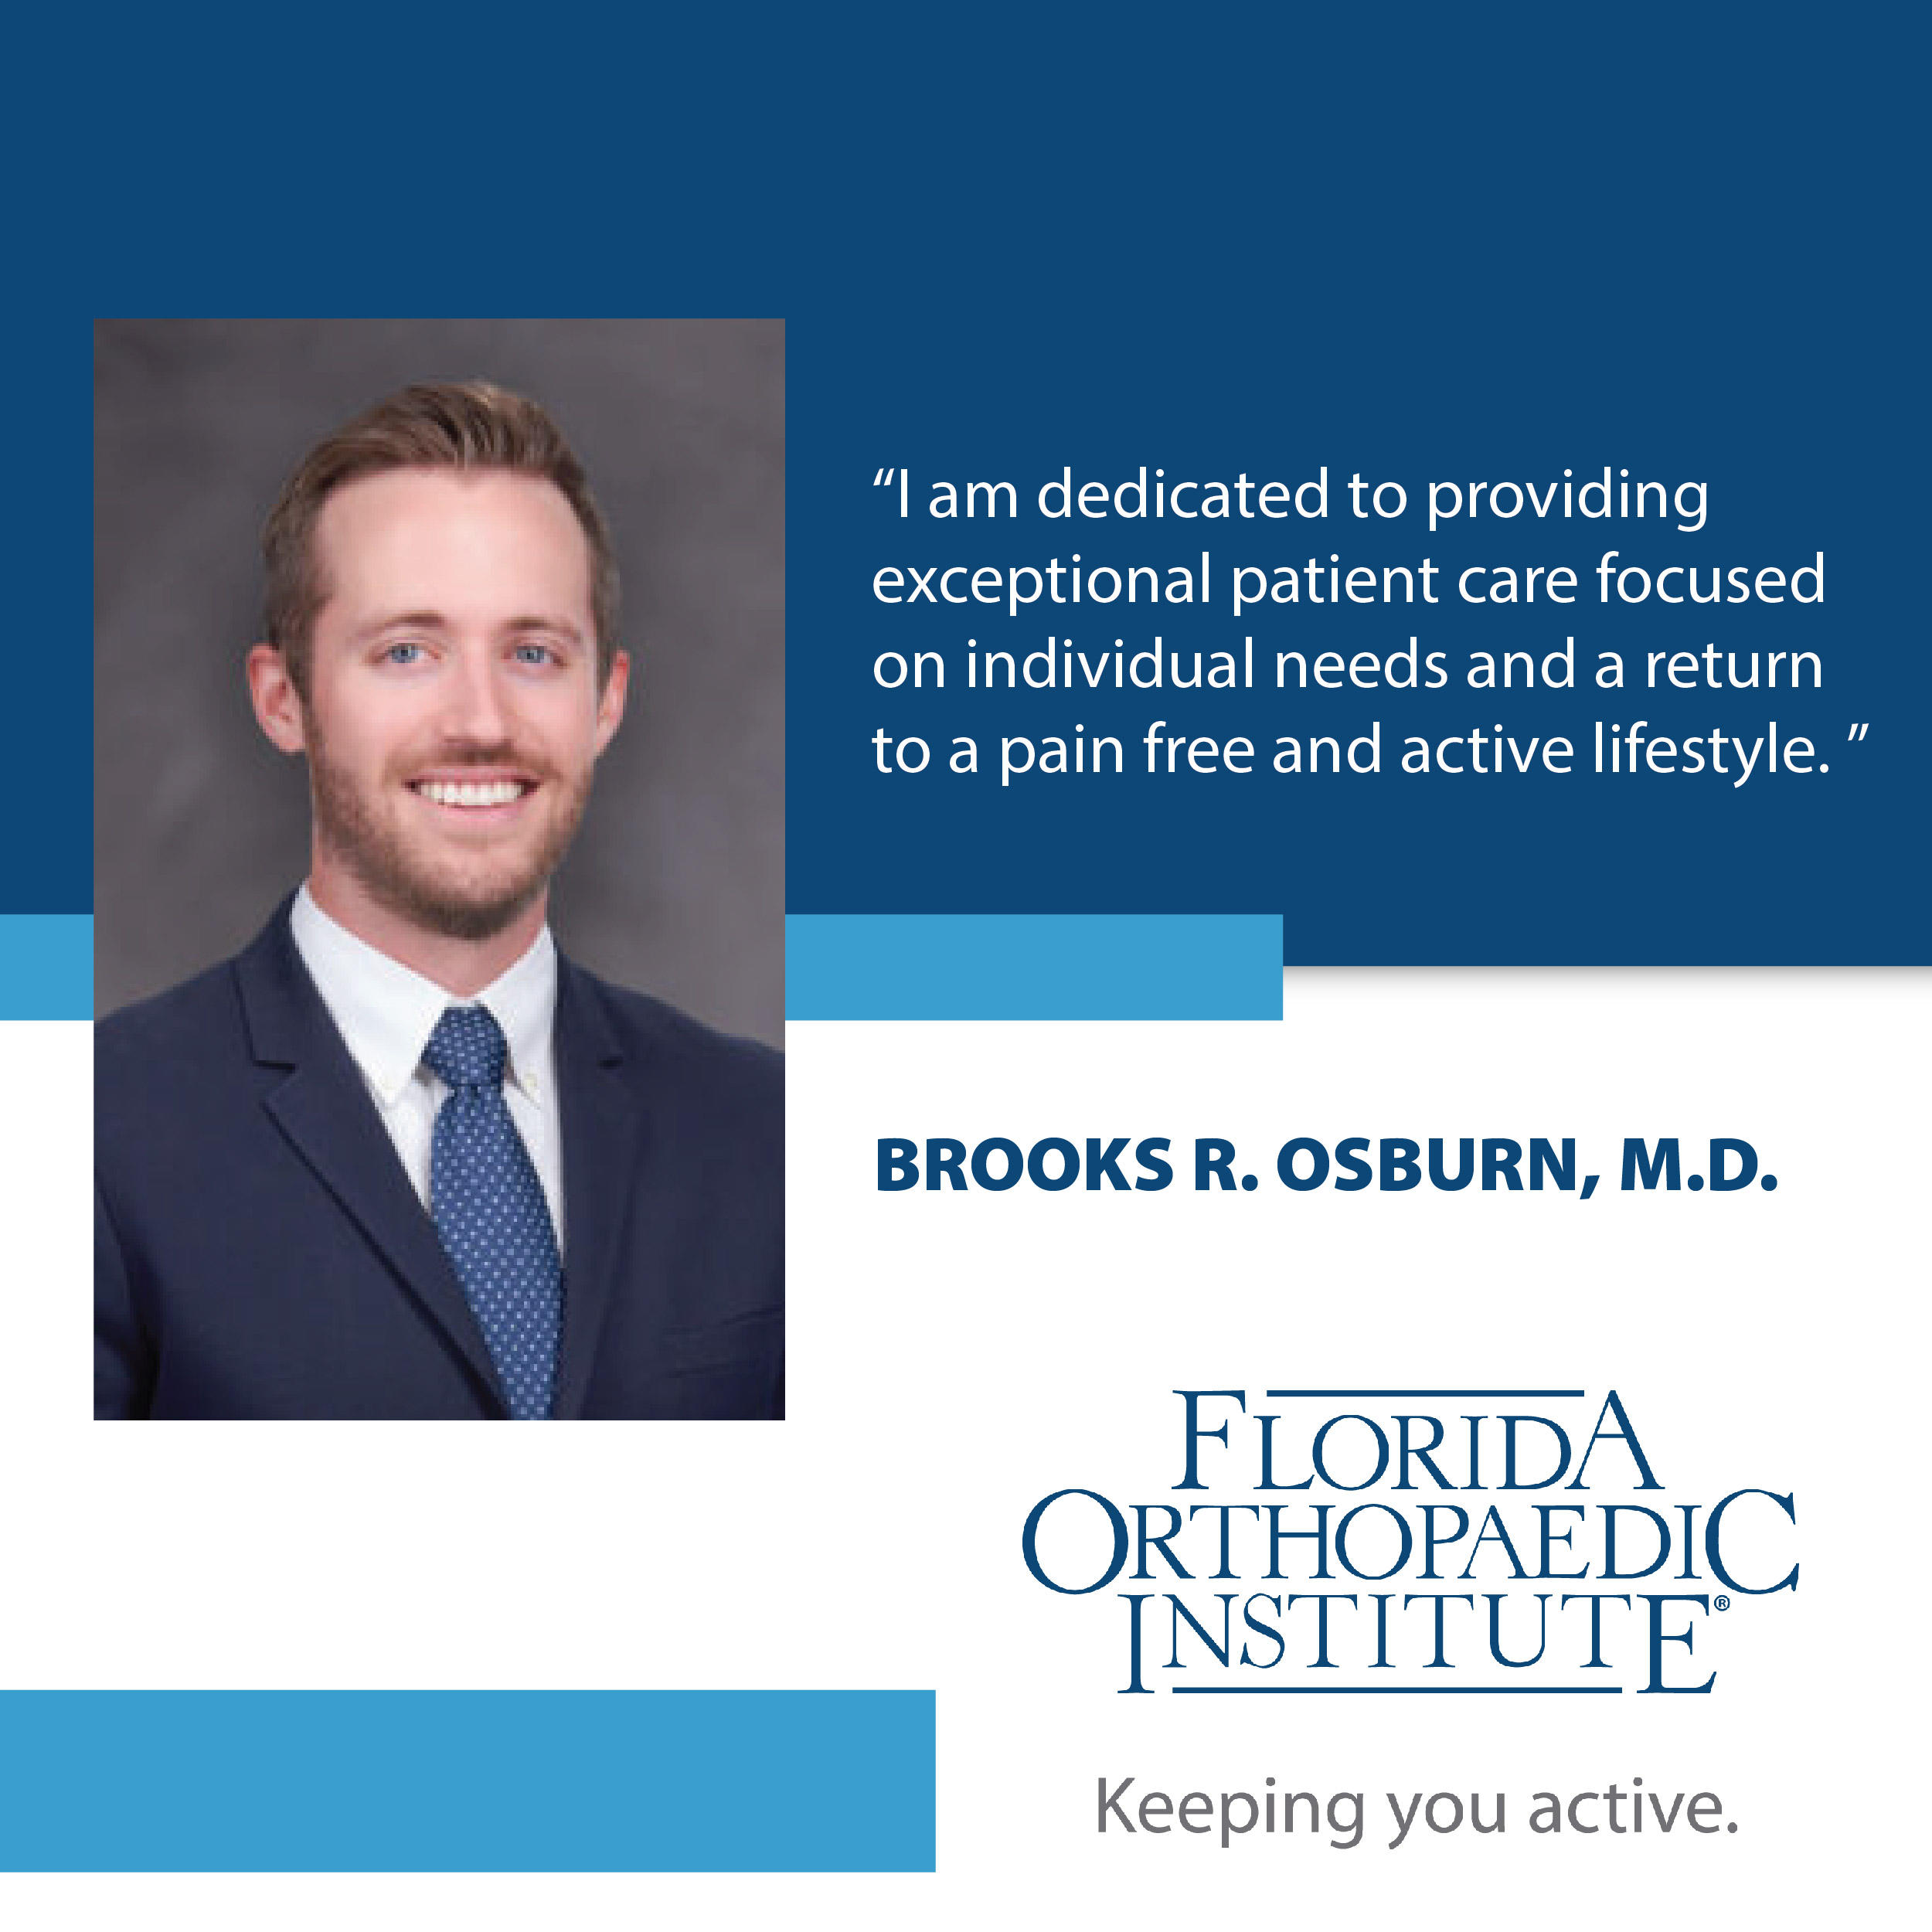 Dr. Brooks R. Osburn physician highlight